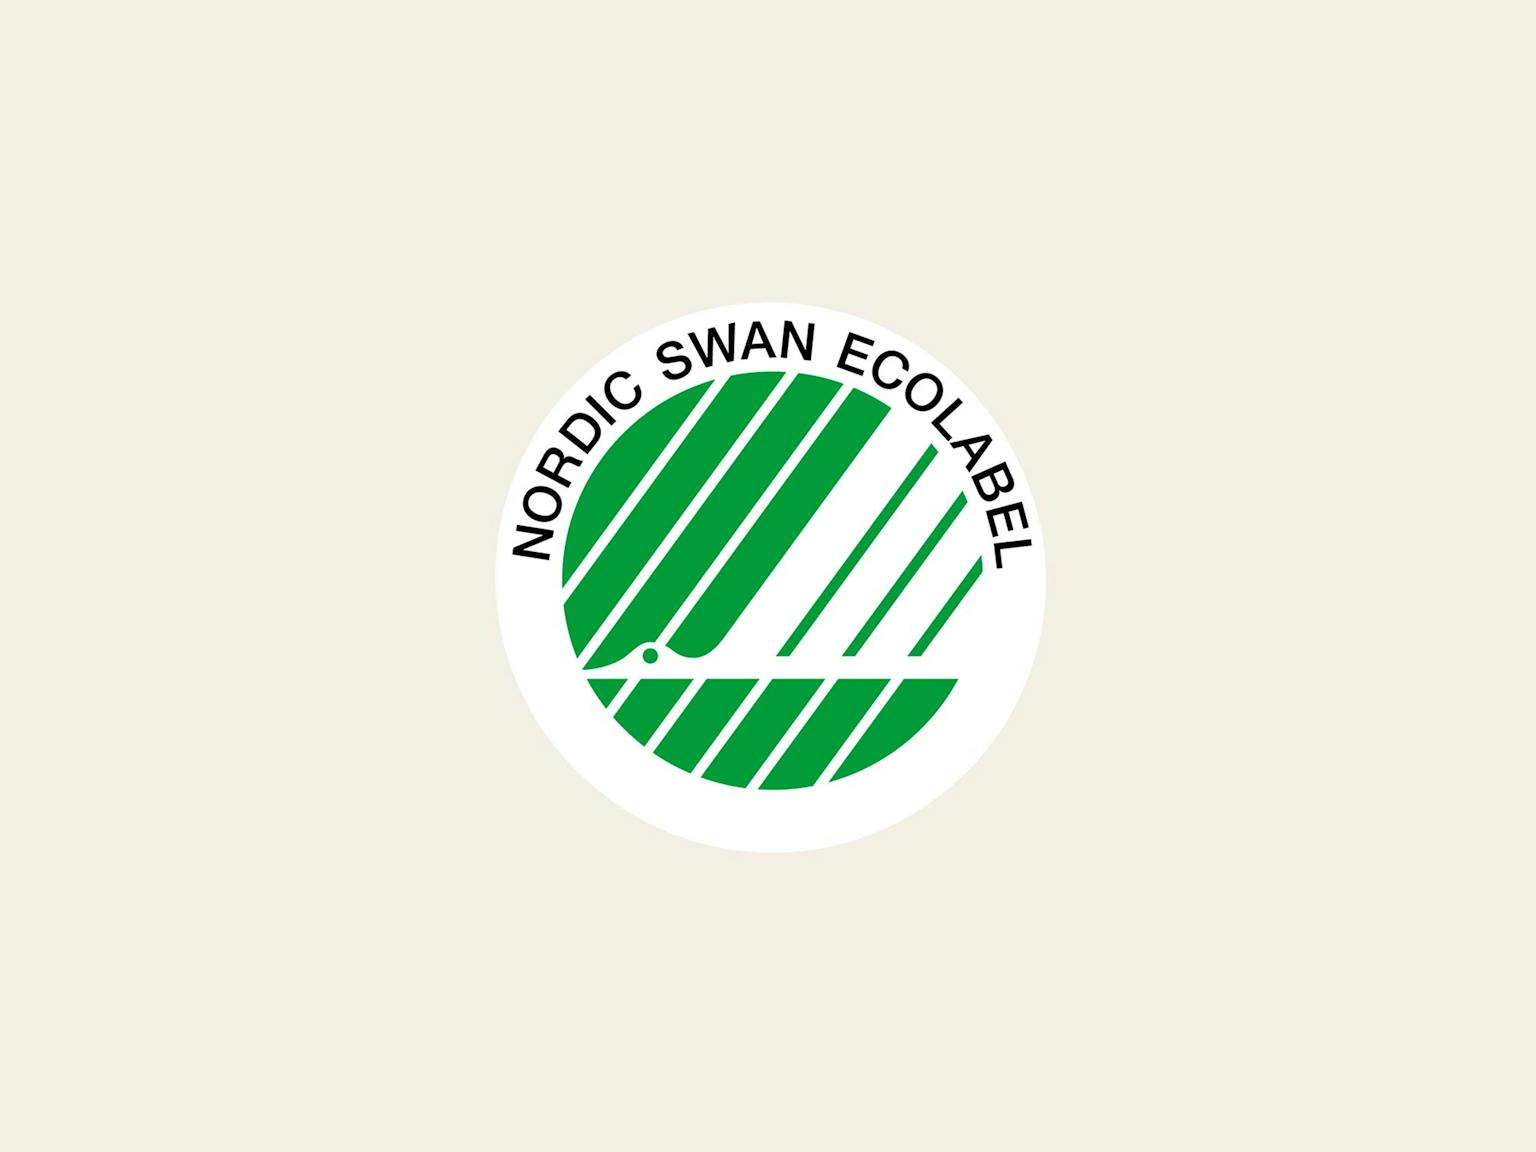 The Nordic Swan Ecolabel logo